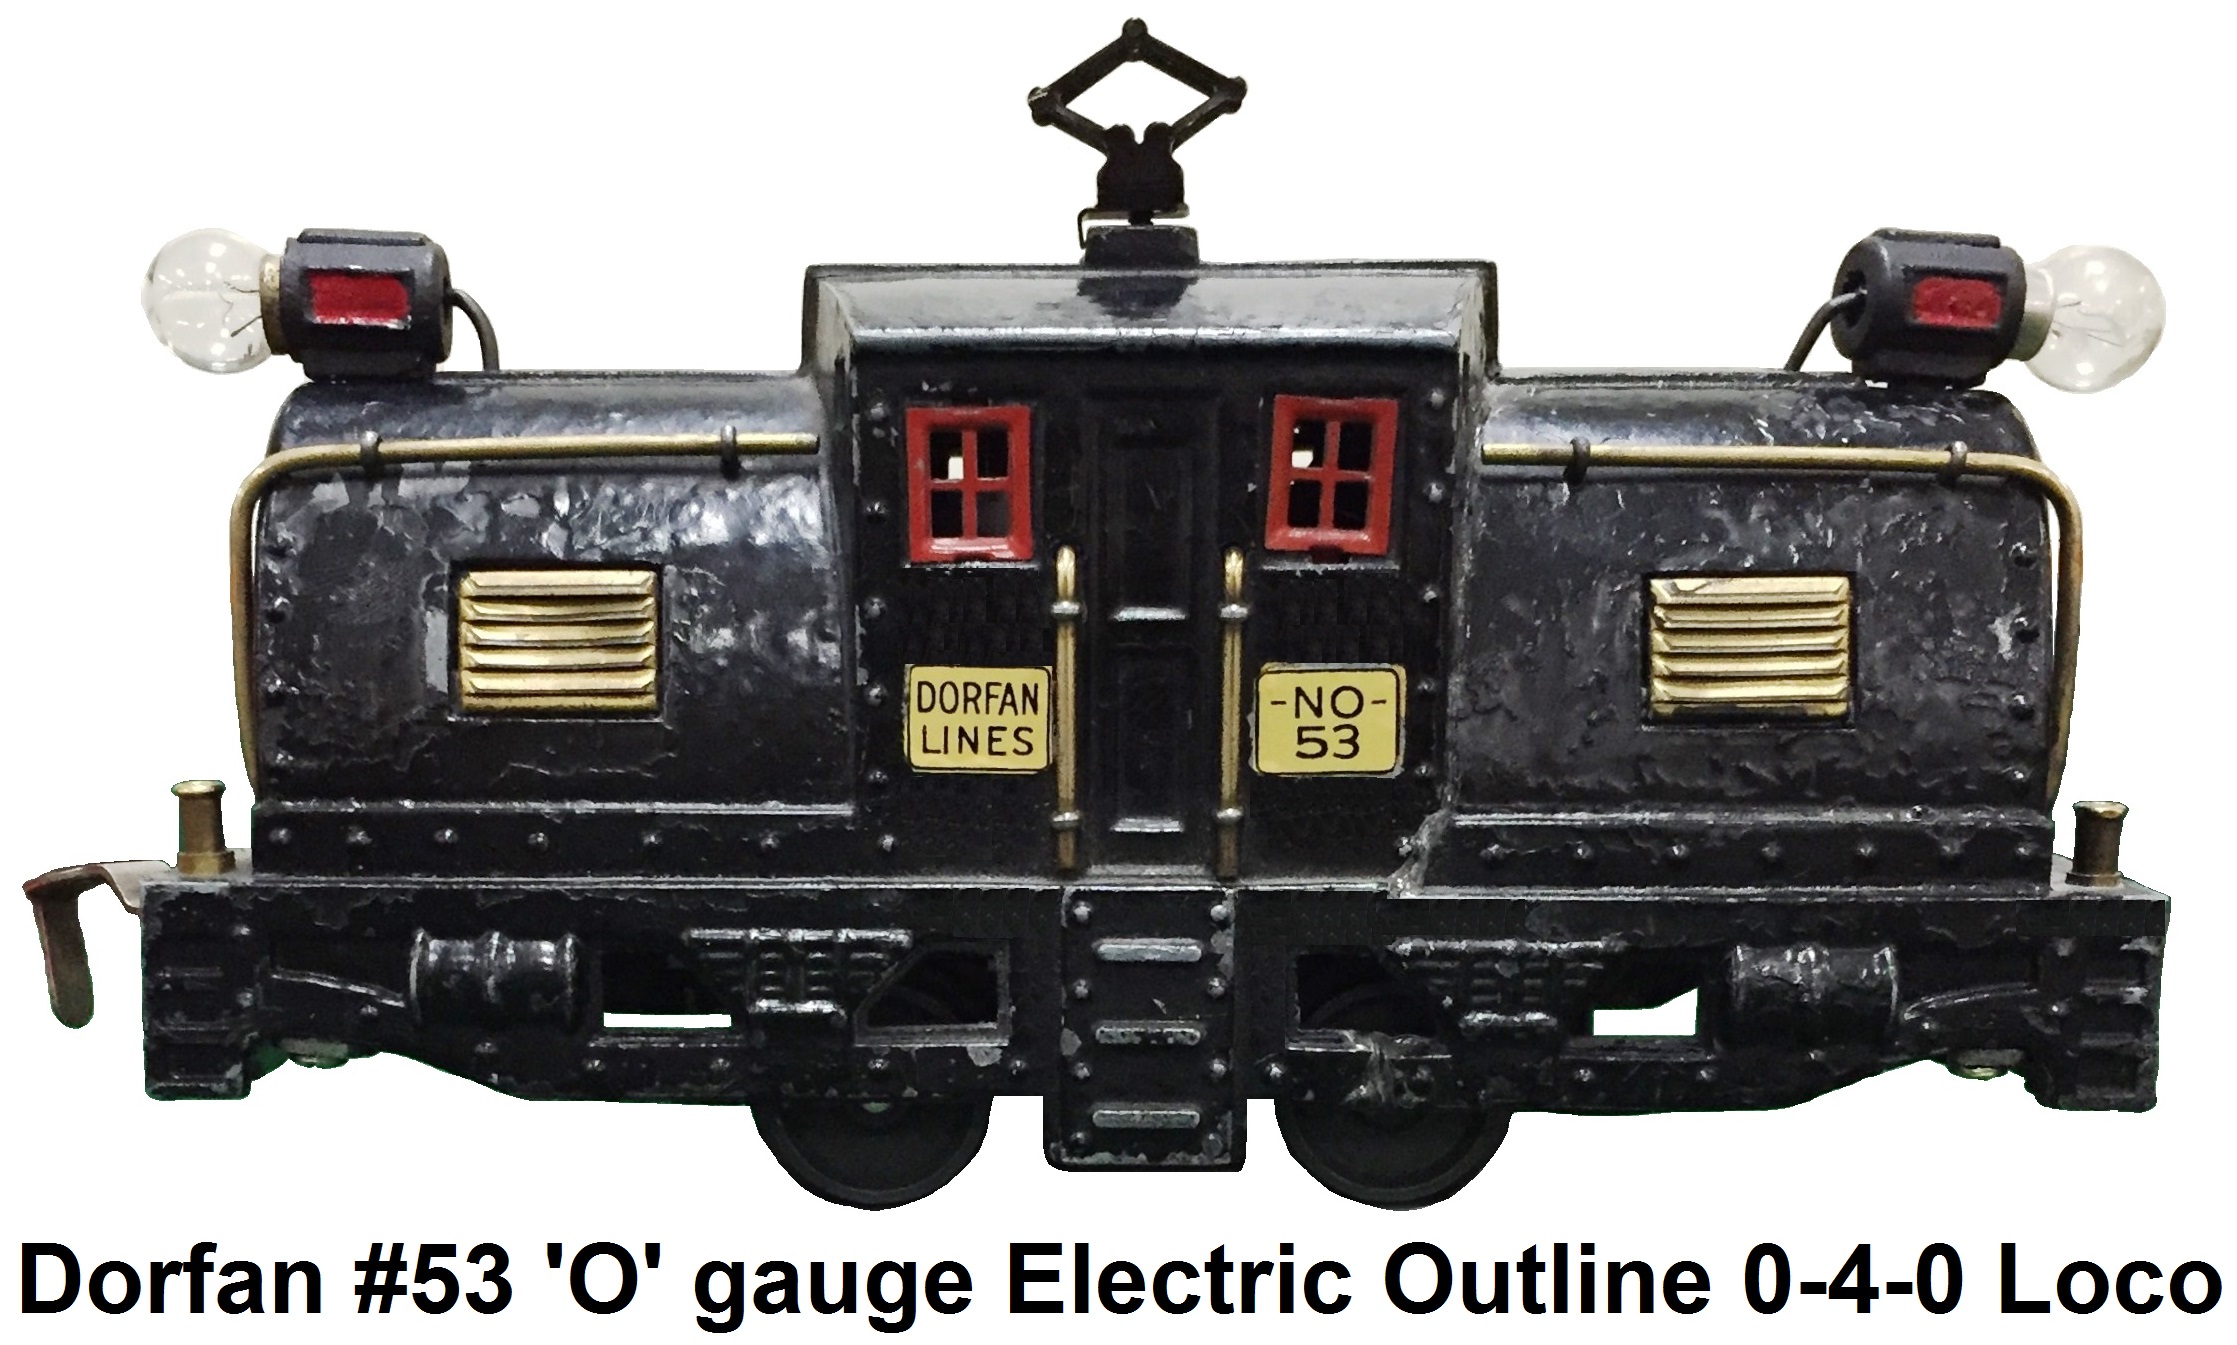 Dorfan 'O' gauge #53 0-4-0 electic outline loco